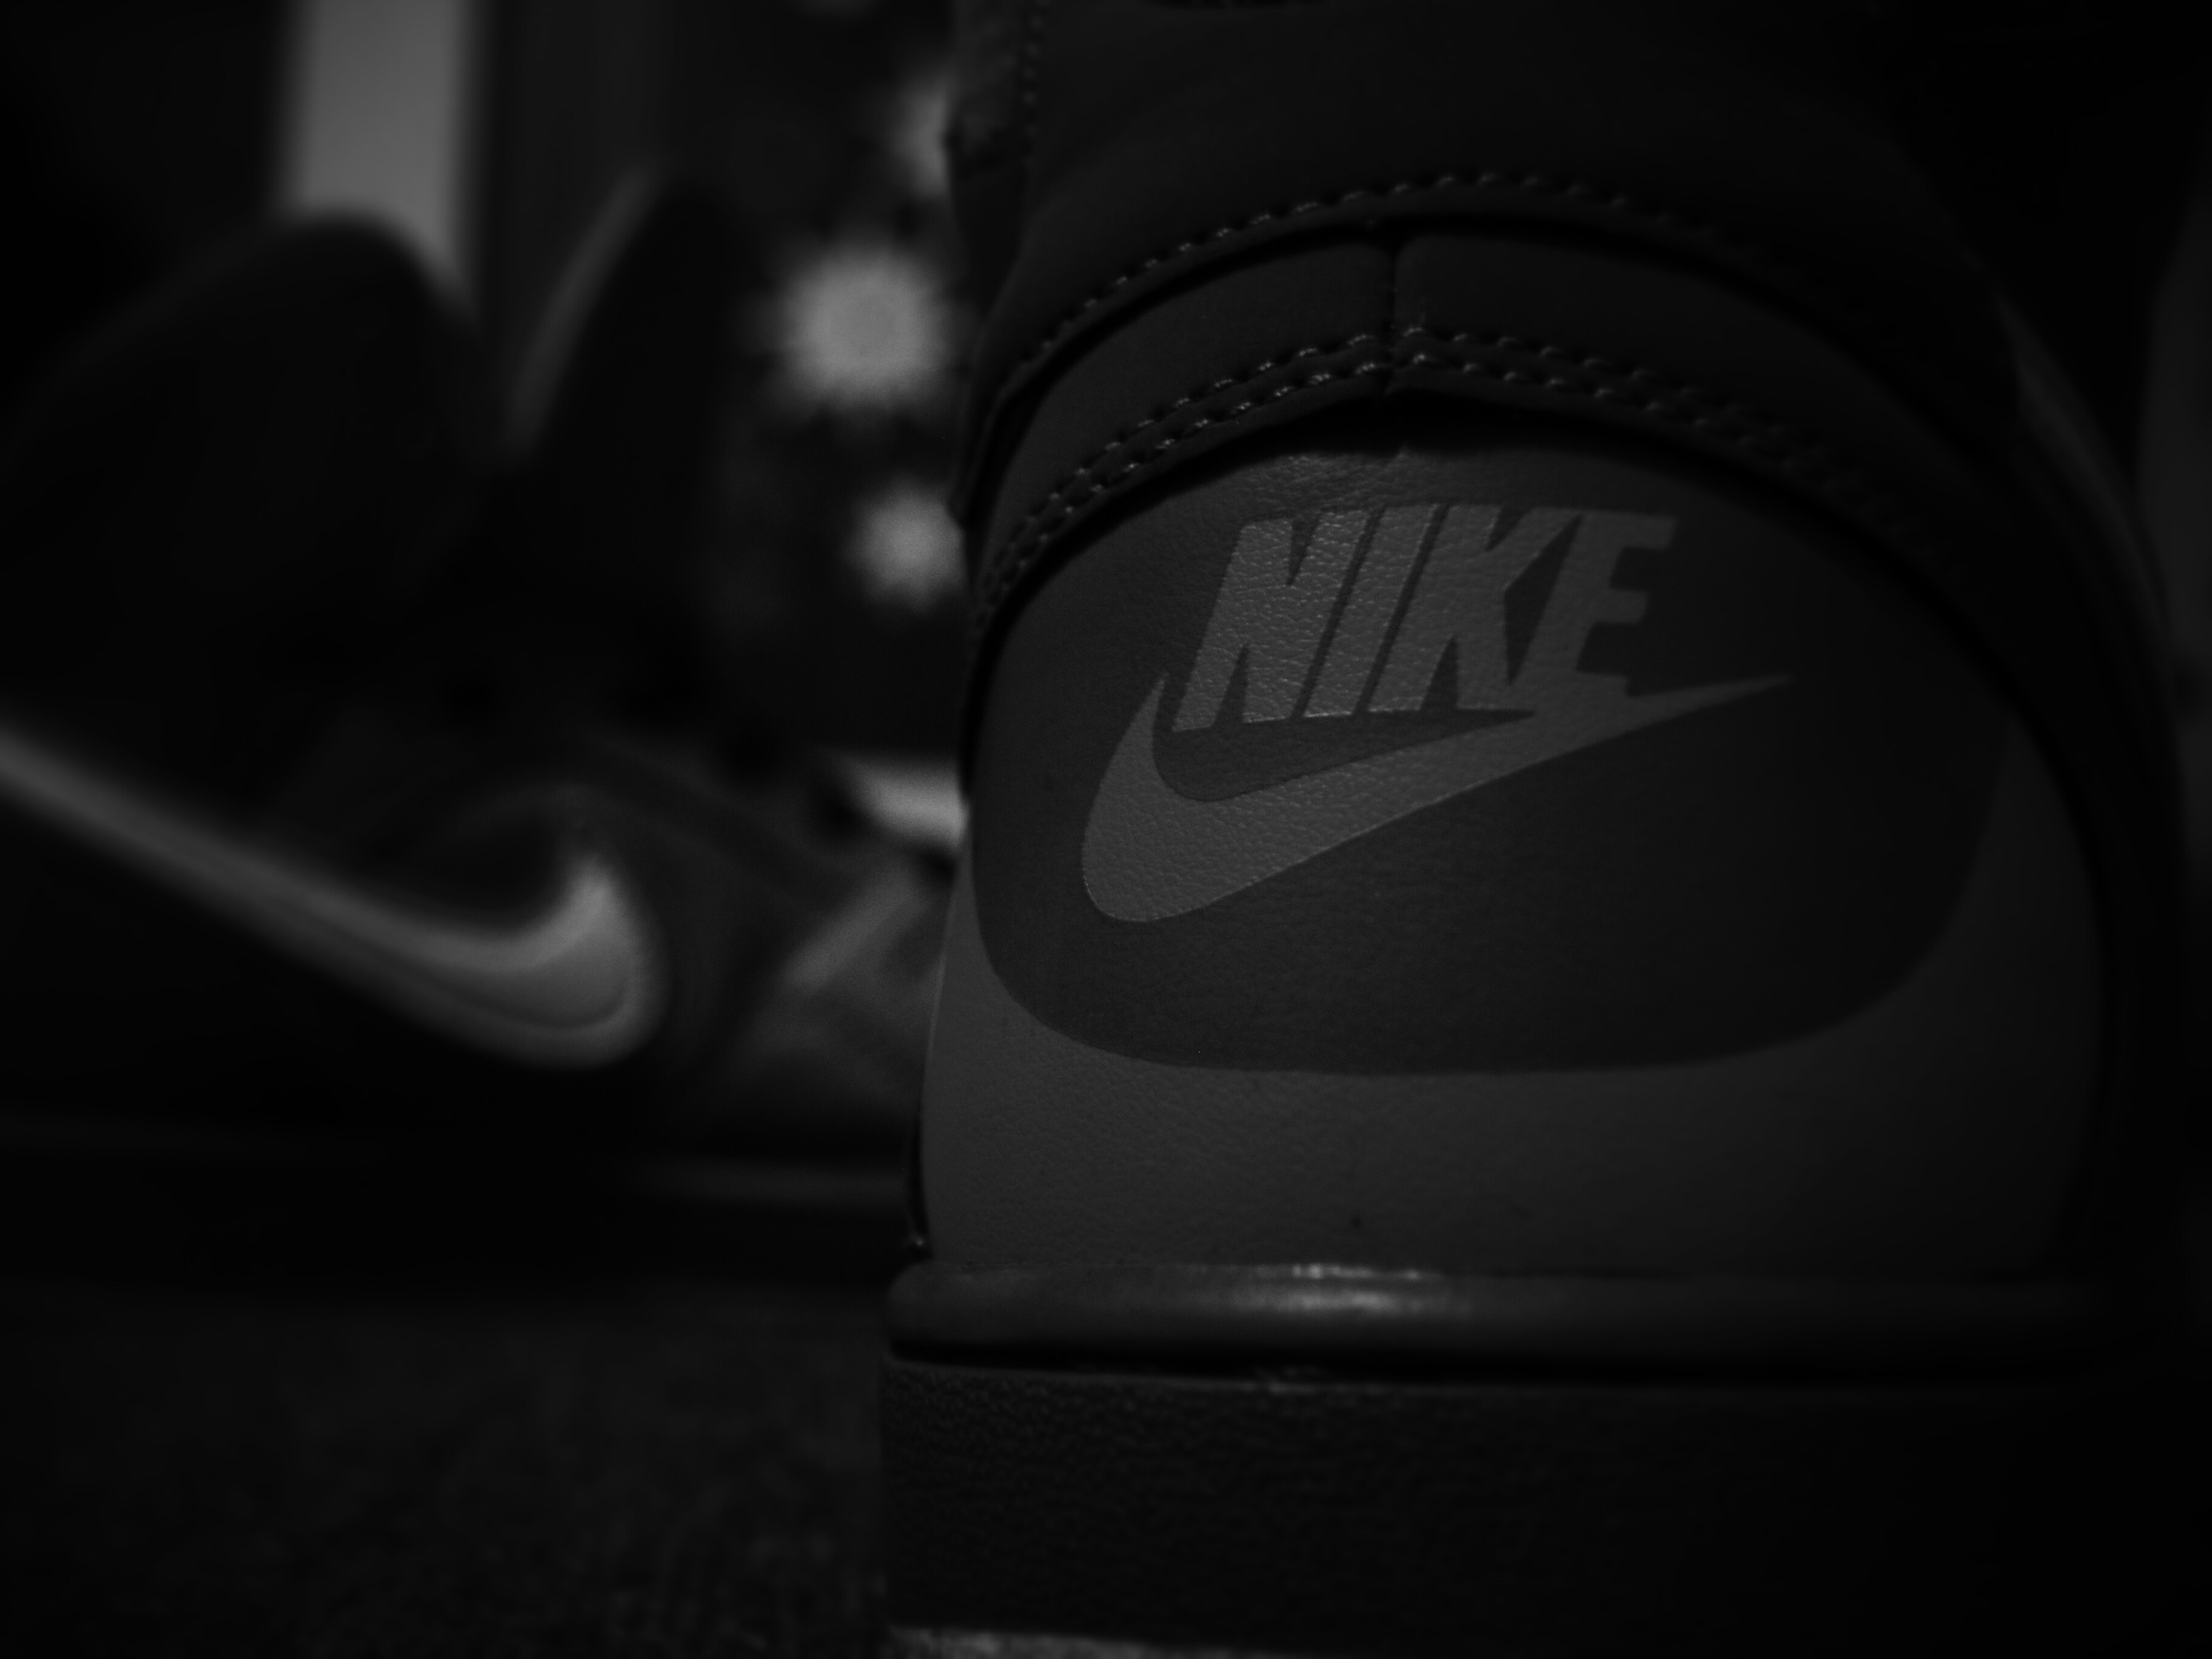 Nike Force Dark Monochrome Logo Sneakers 3648x2736